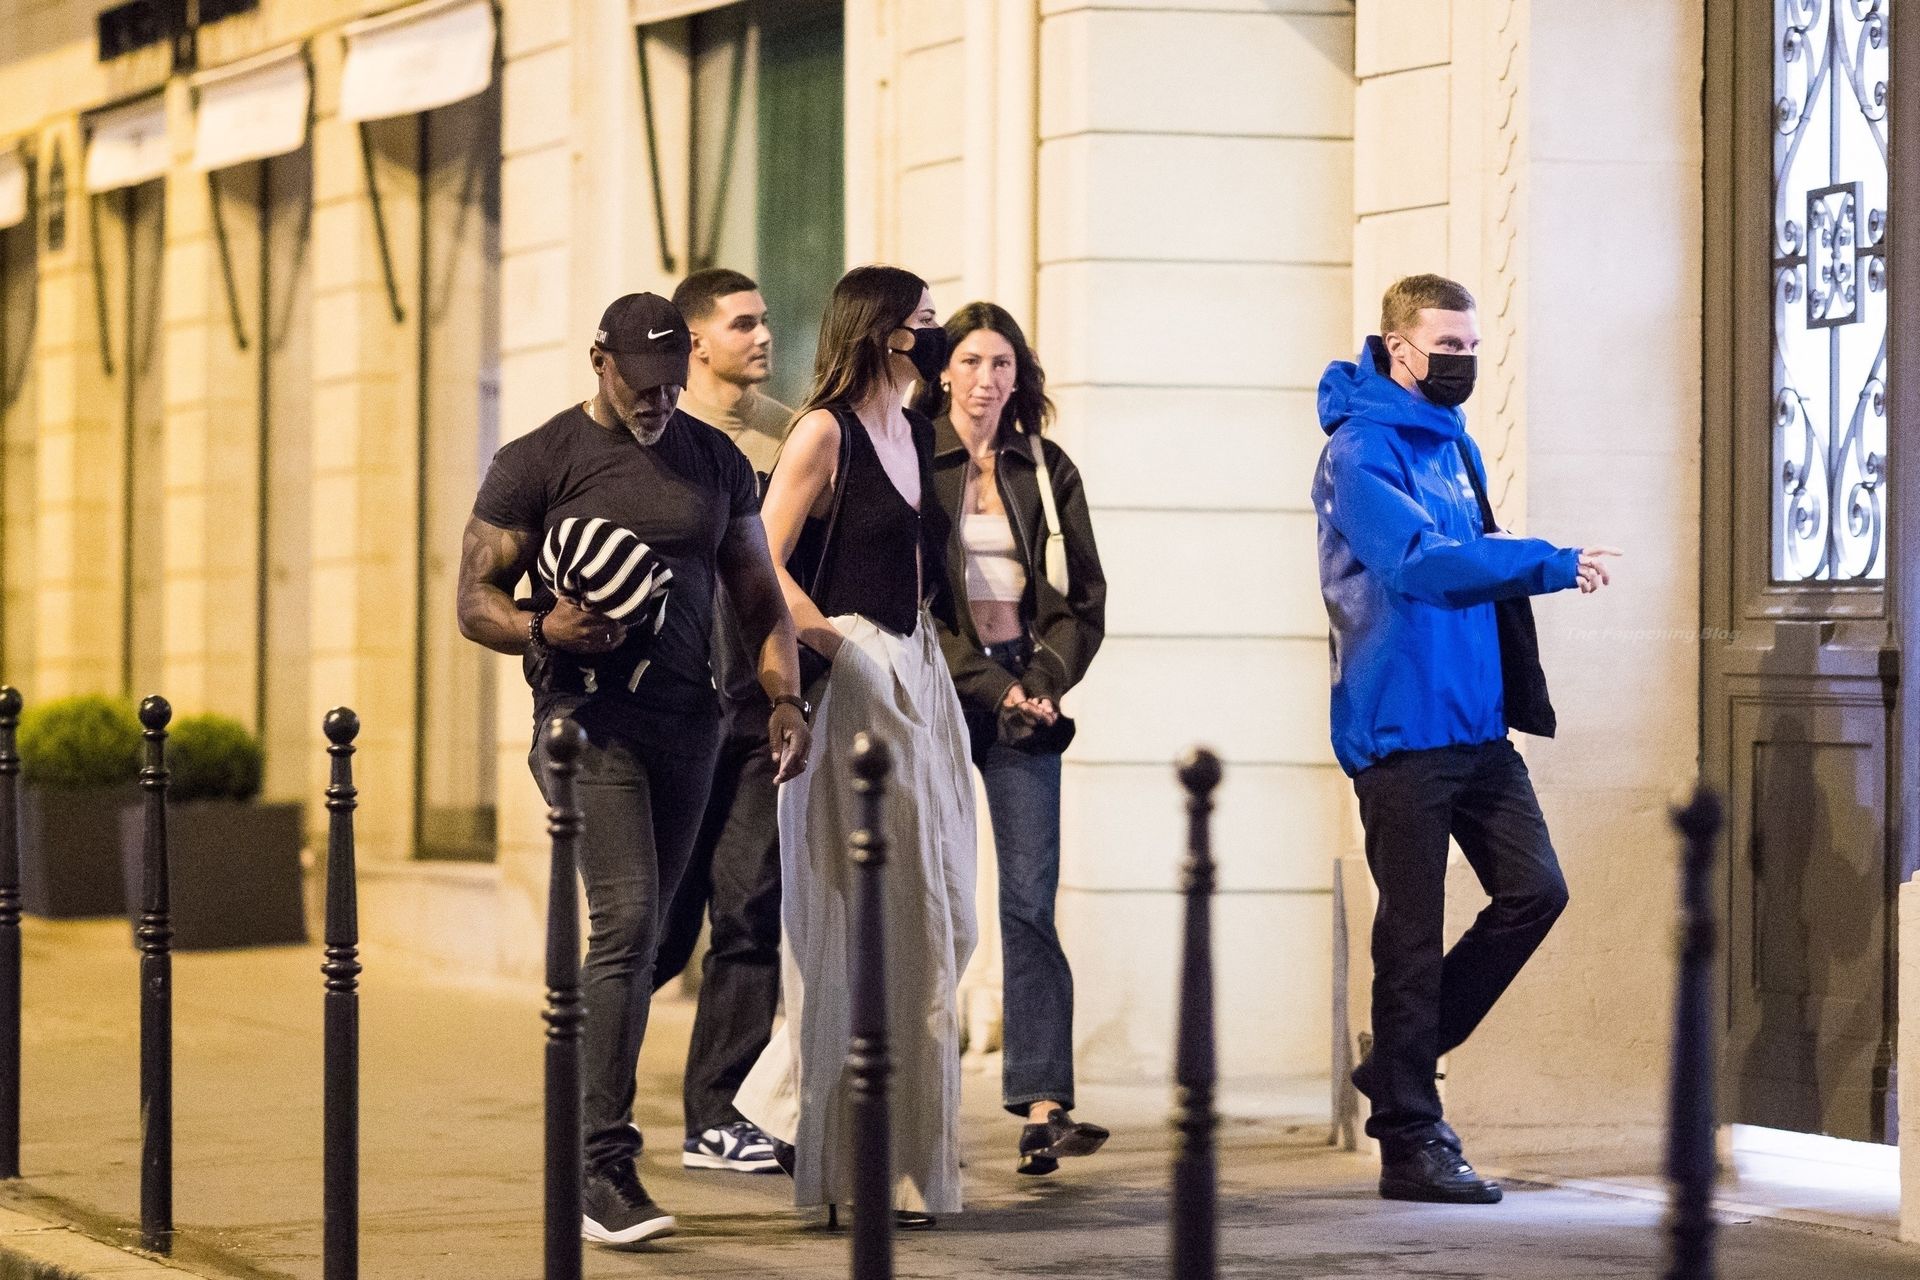 Braless Kendall Jenner Spends Her Night at Dinand par Ferdi Club in Paris (22 Photos)